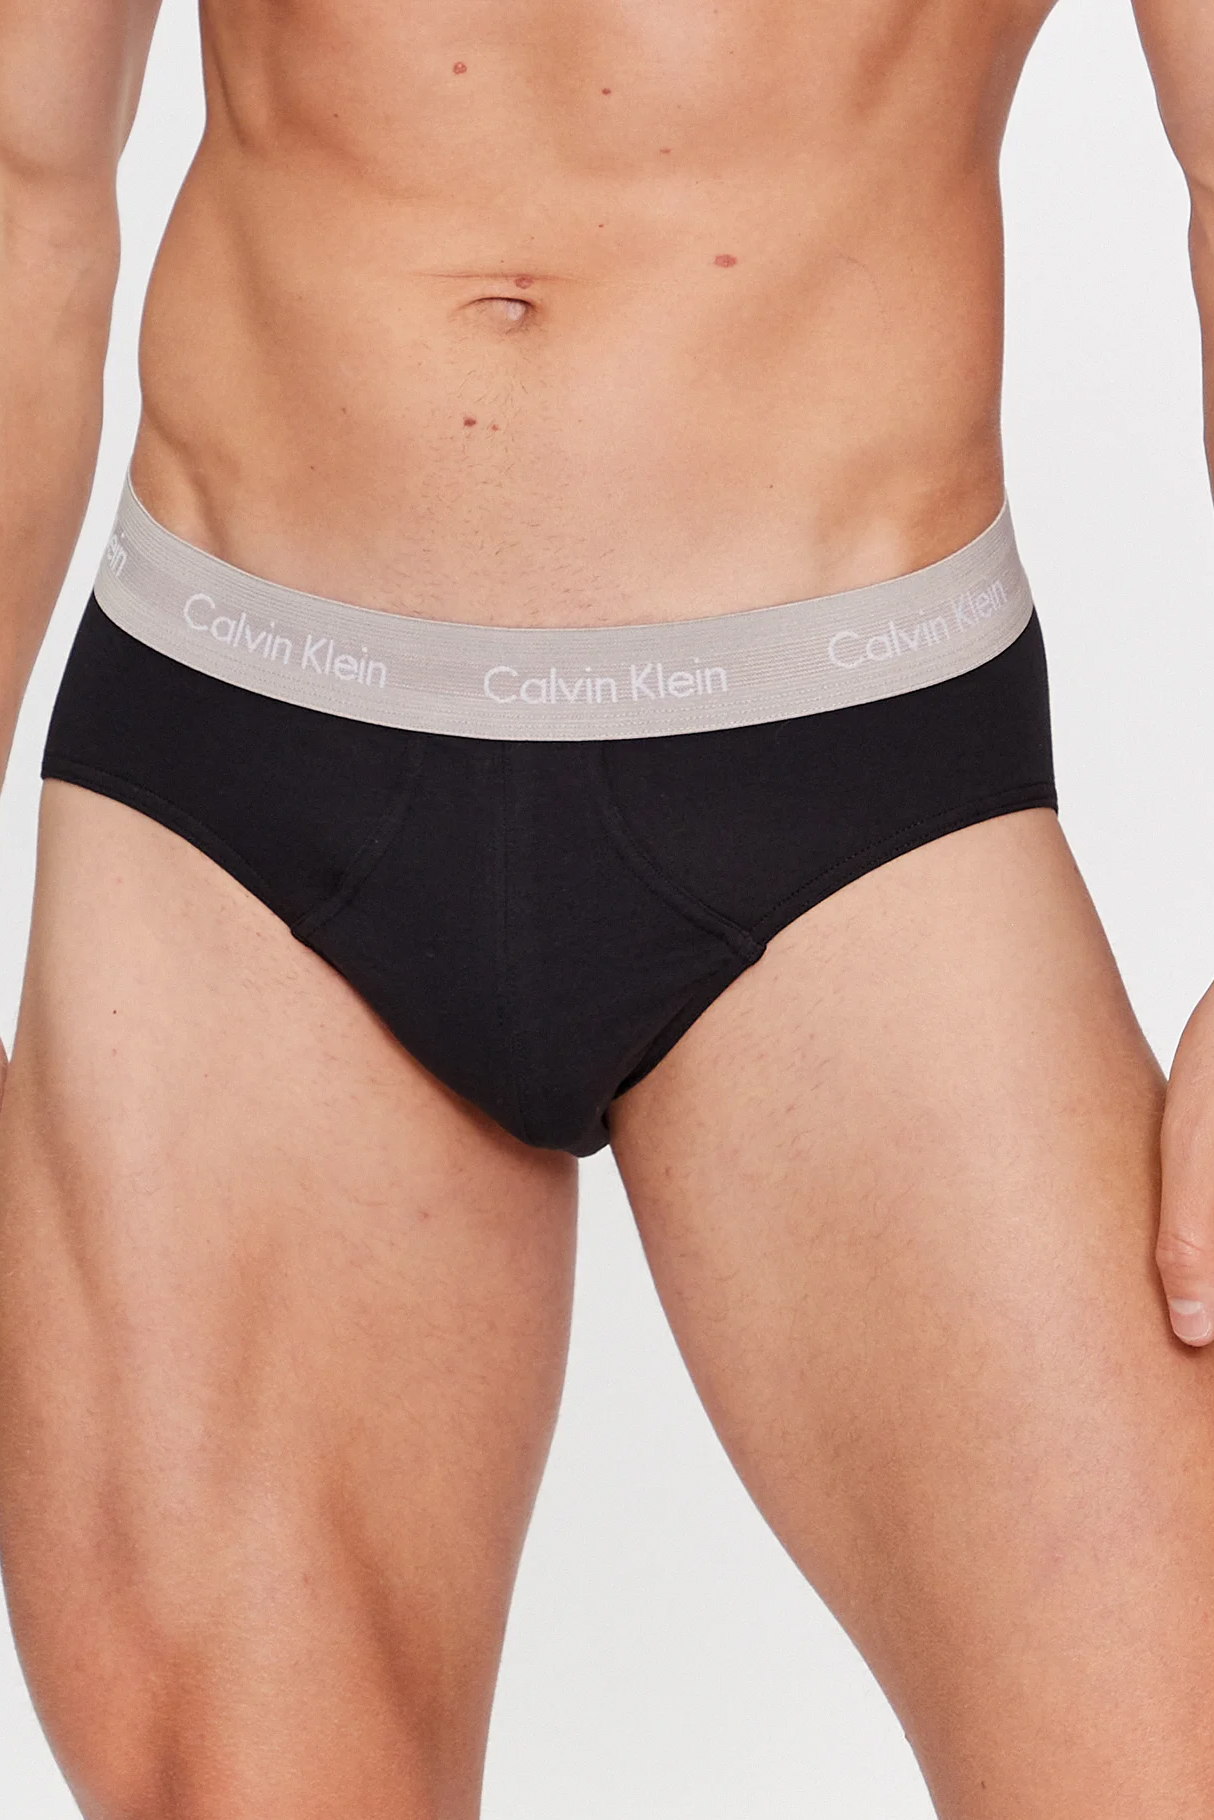 Underwear Bordeaux Slip | Shop HIP Goccia Calvin 3PK Klein BRIEF